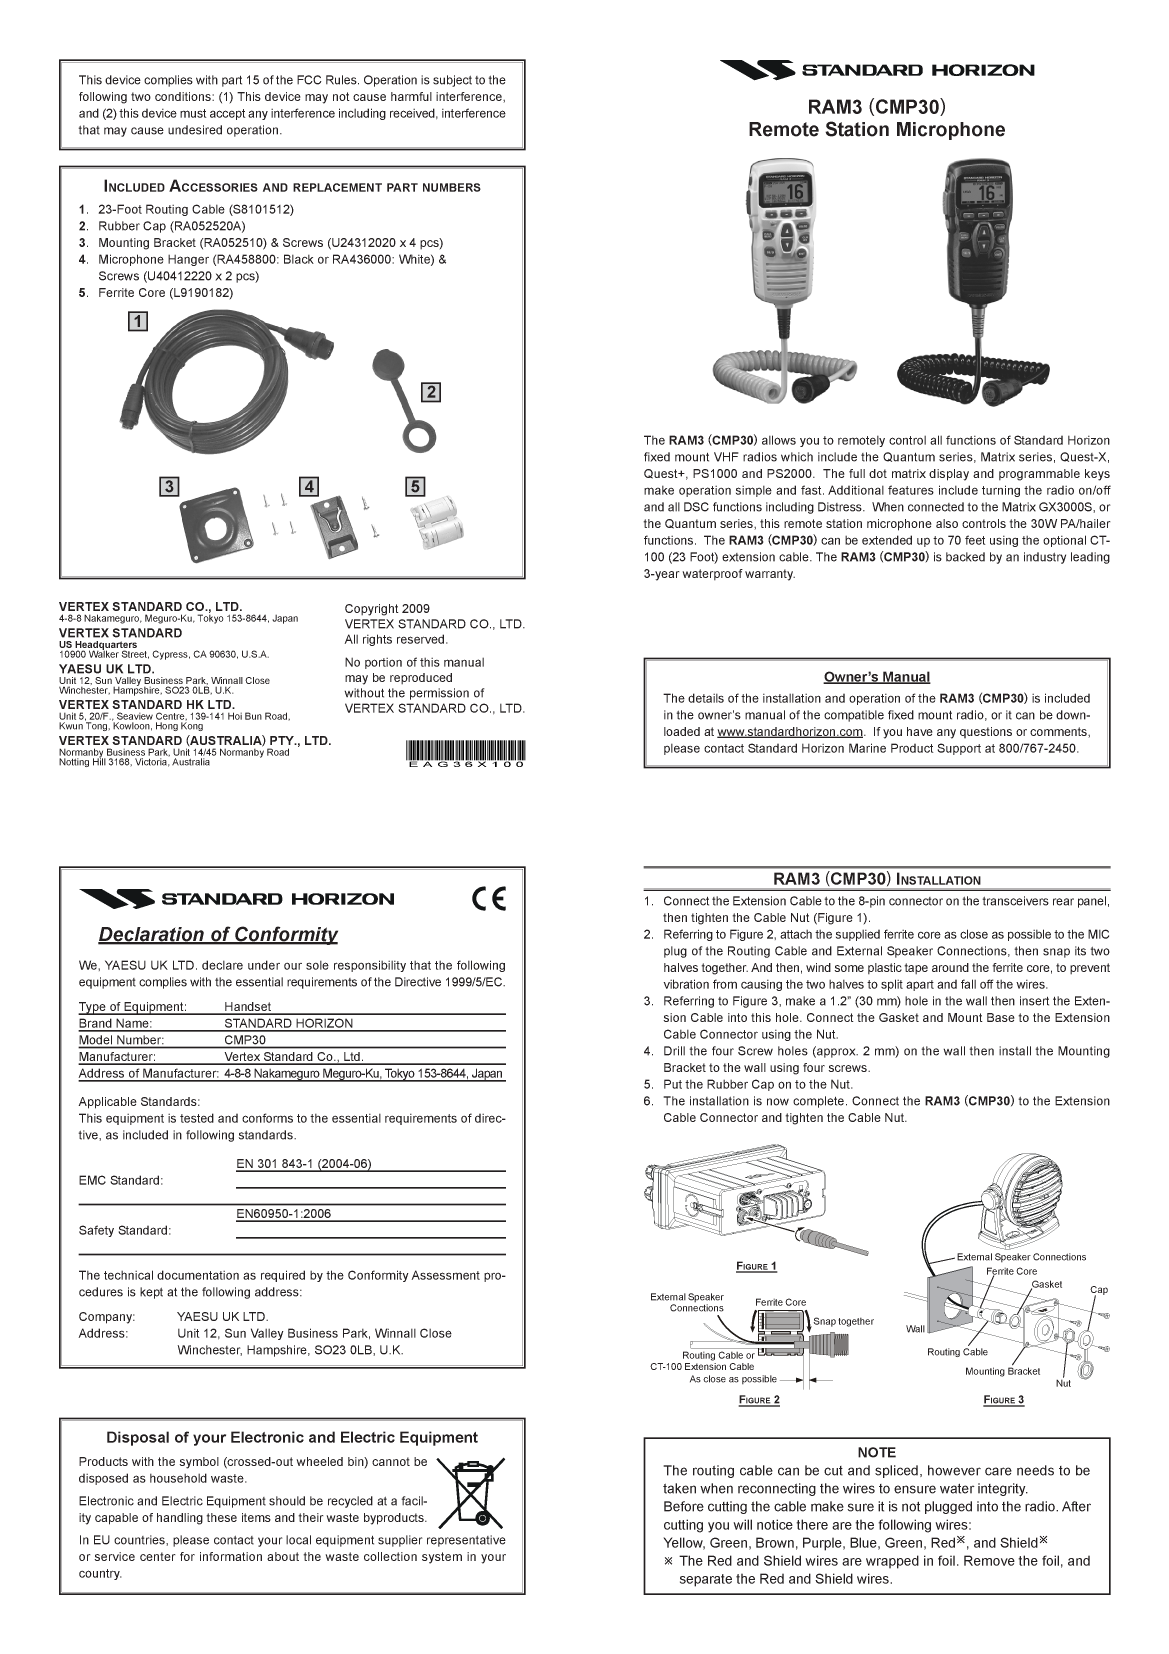   Standard  Horizon Cmp30  Remote  Manual 34507om manual page 2